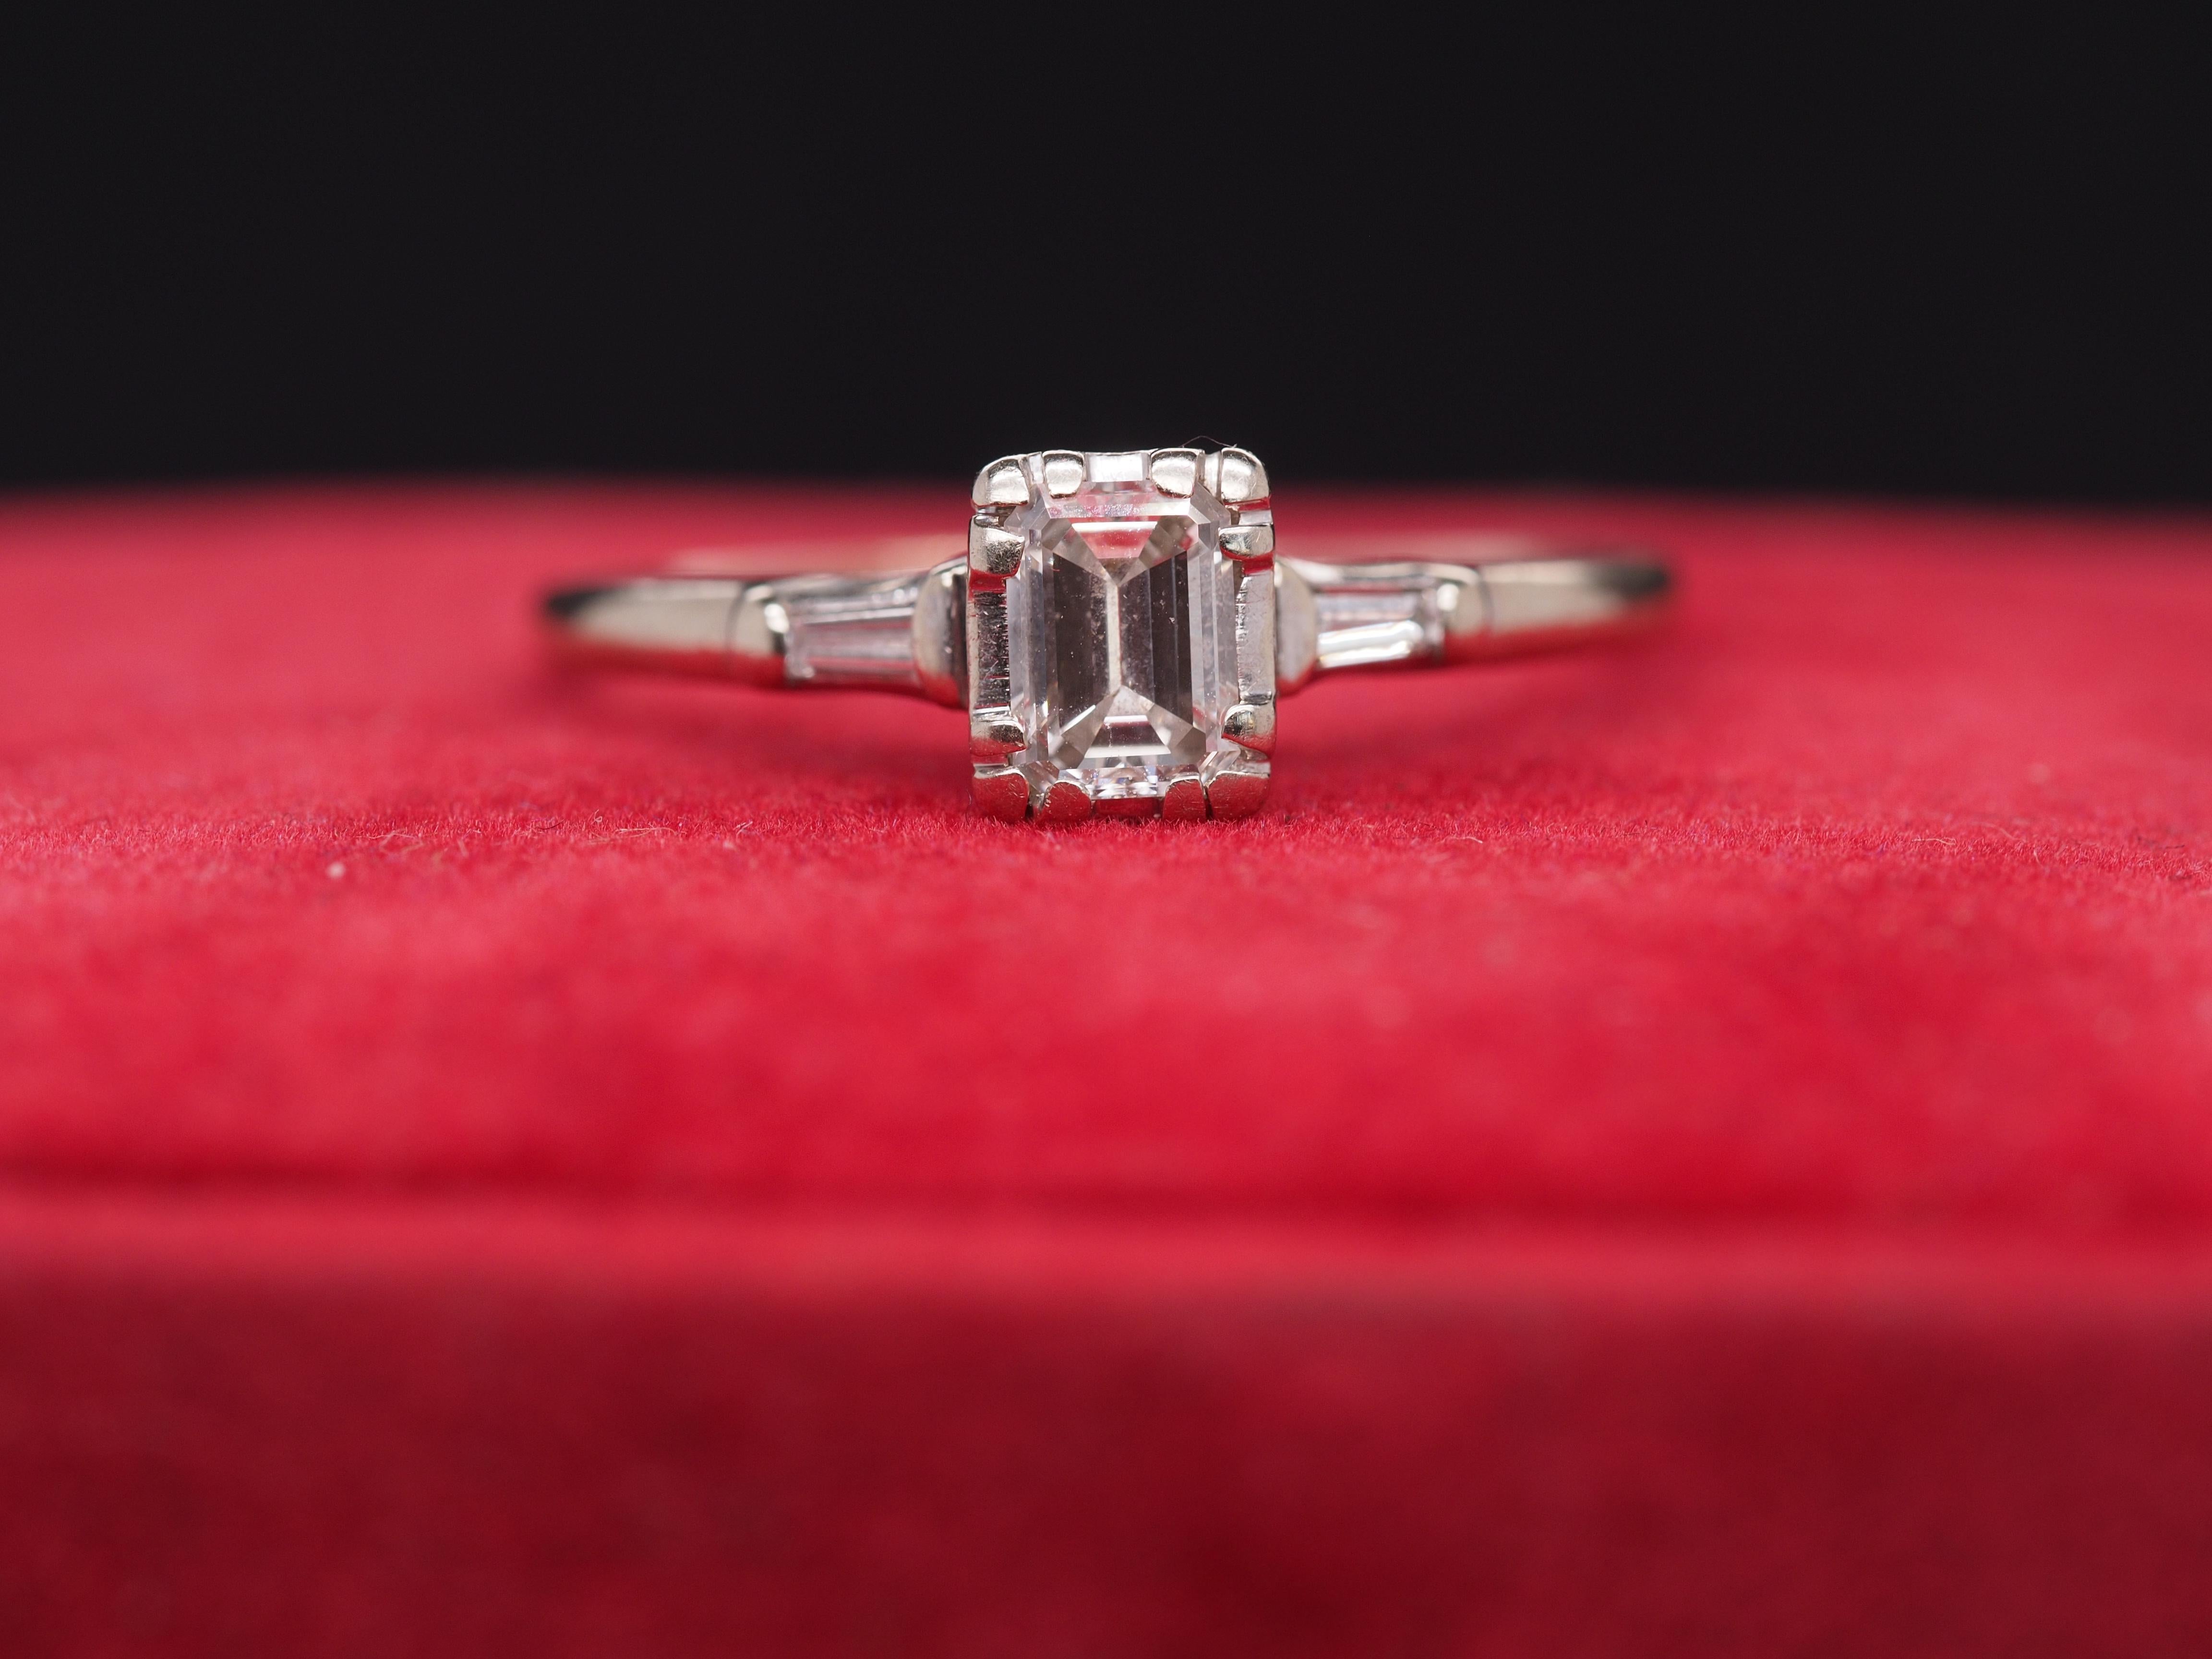 .50 carat emerald diamond engagement ring